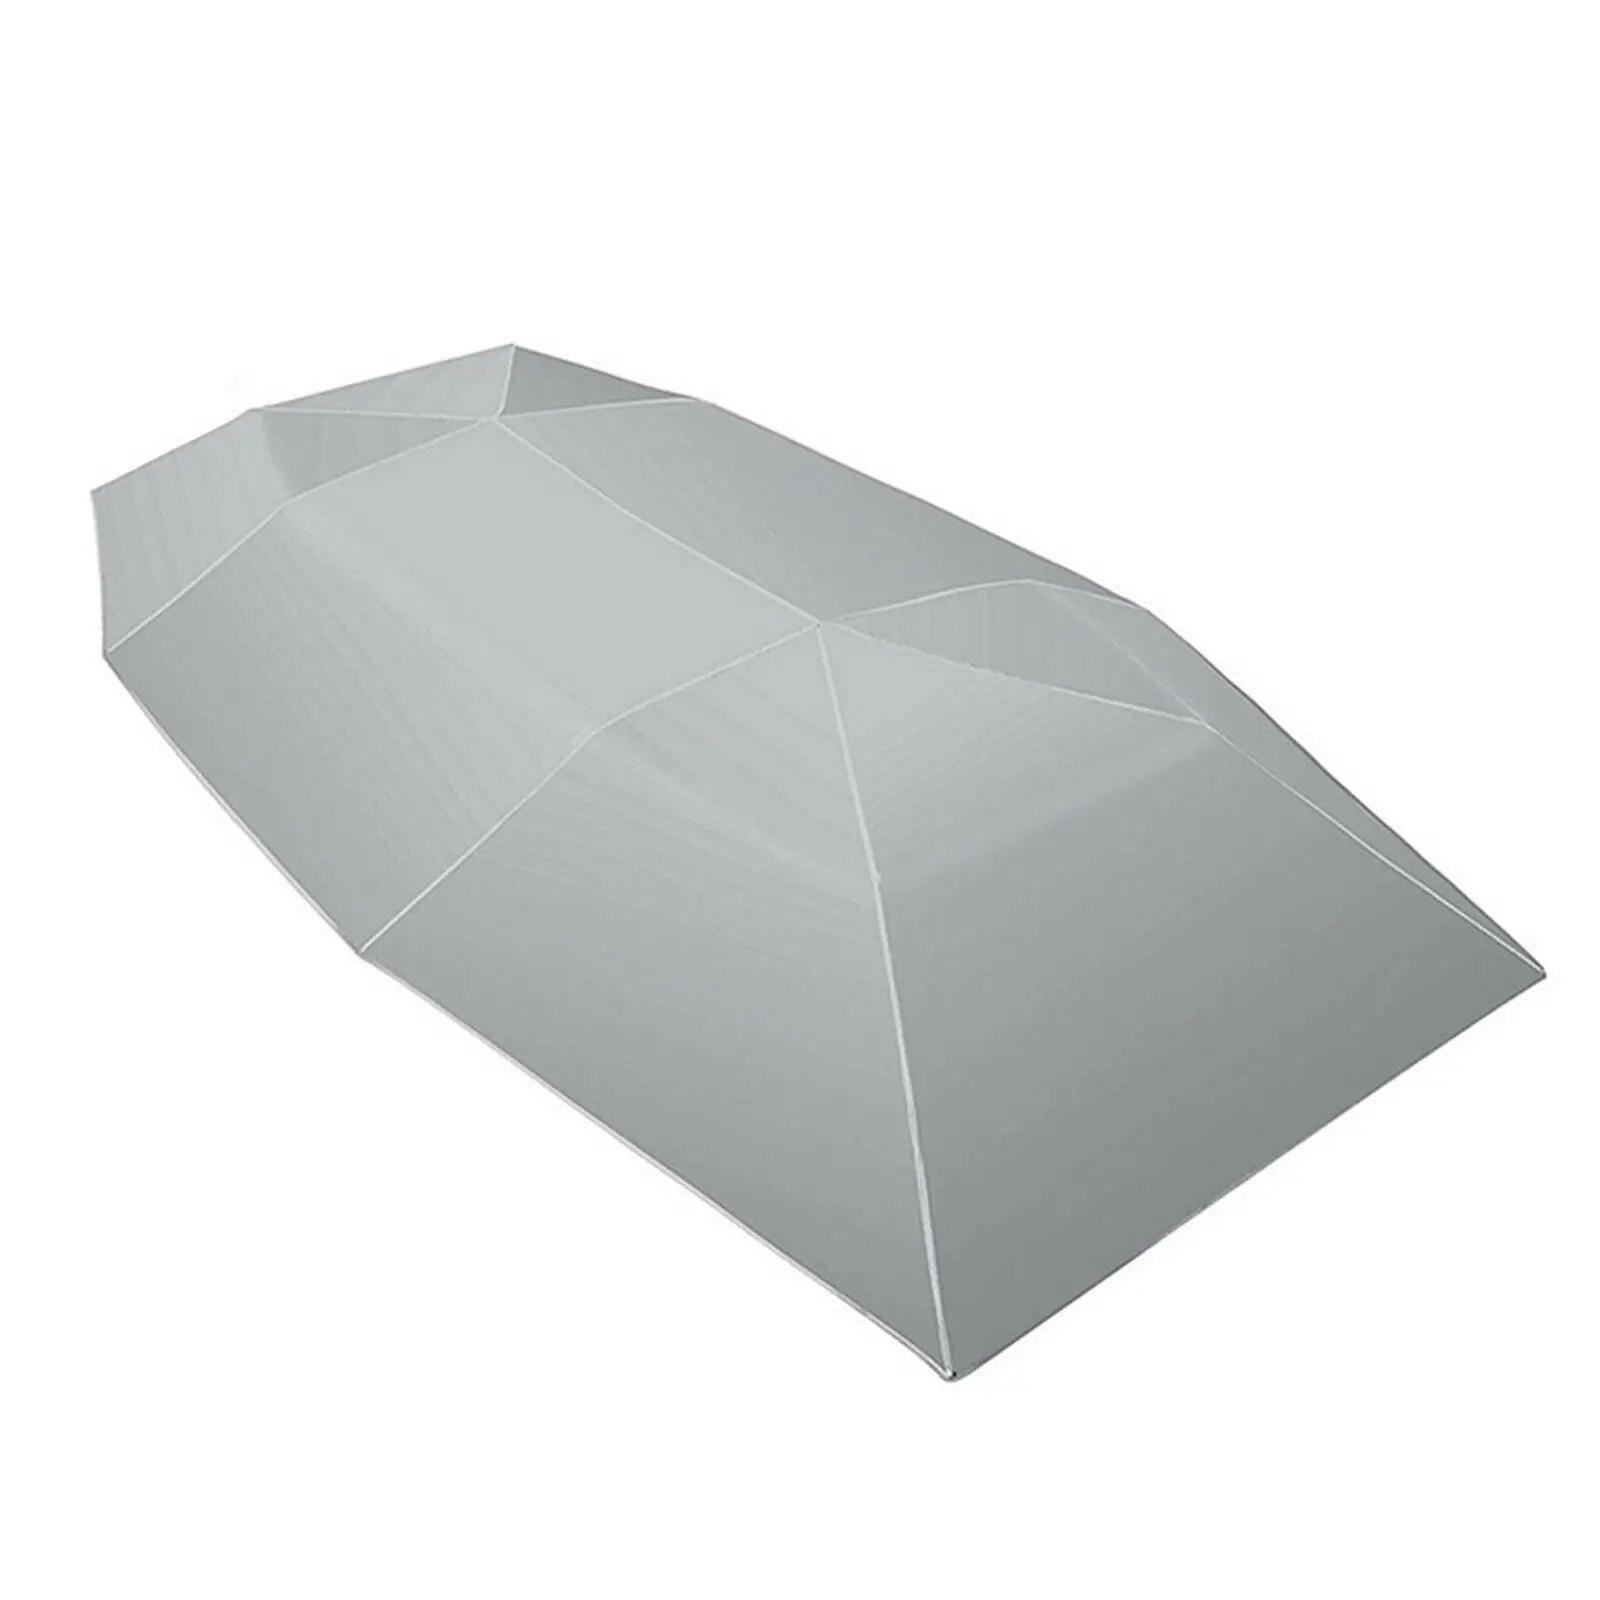 Umbrella Portable Anti-UV Protection Roof Cover 